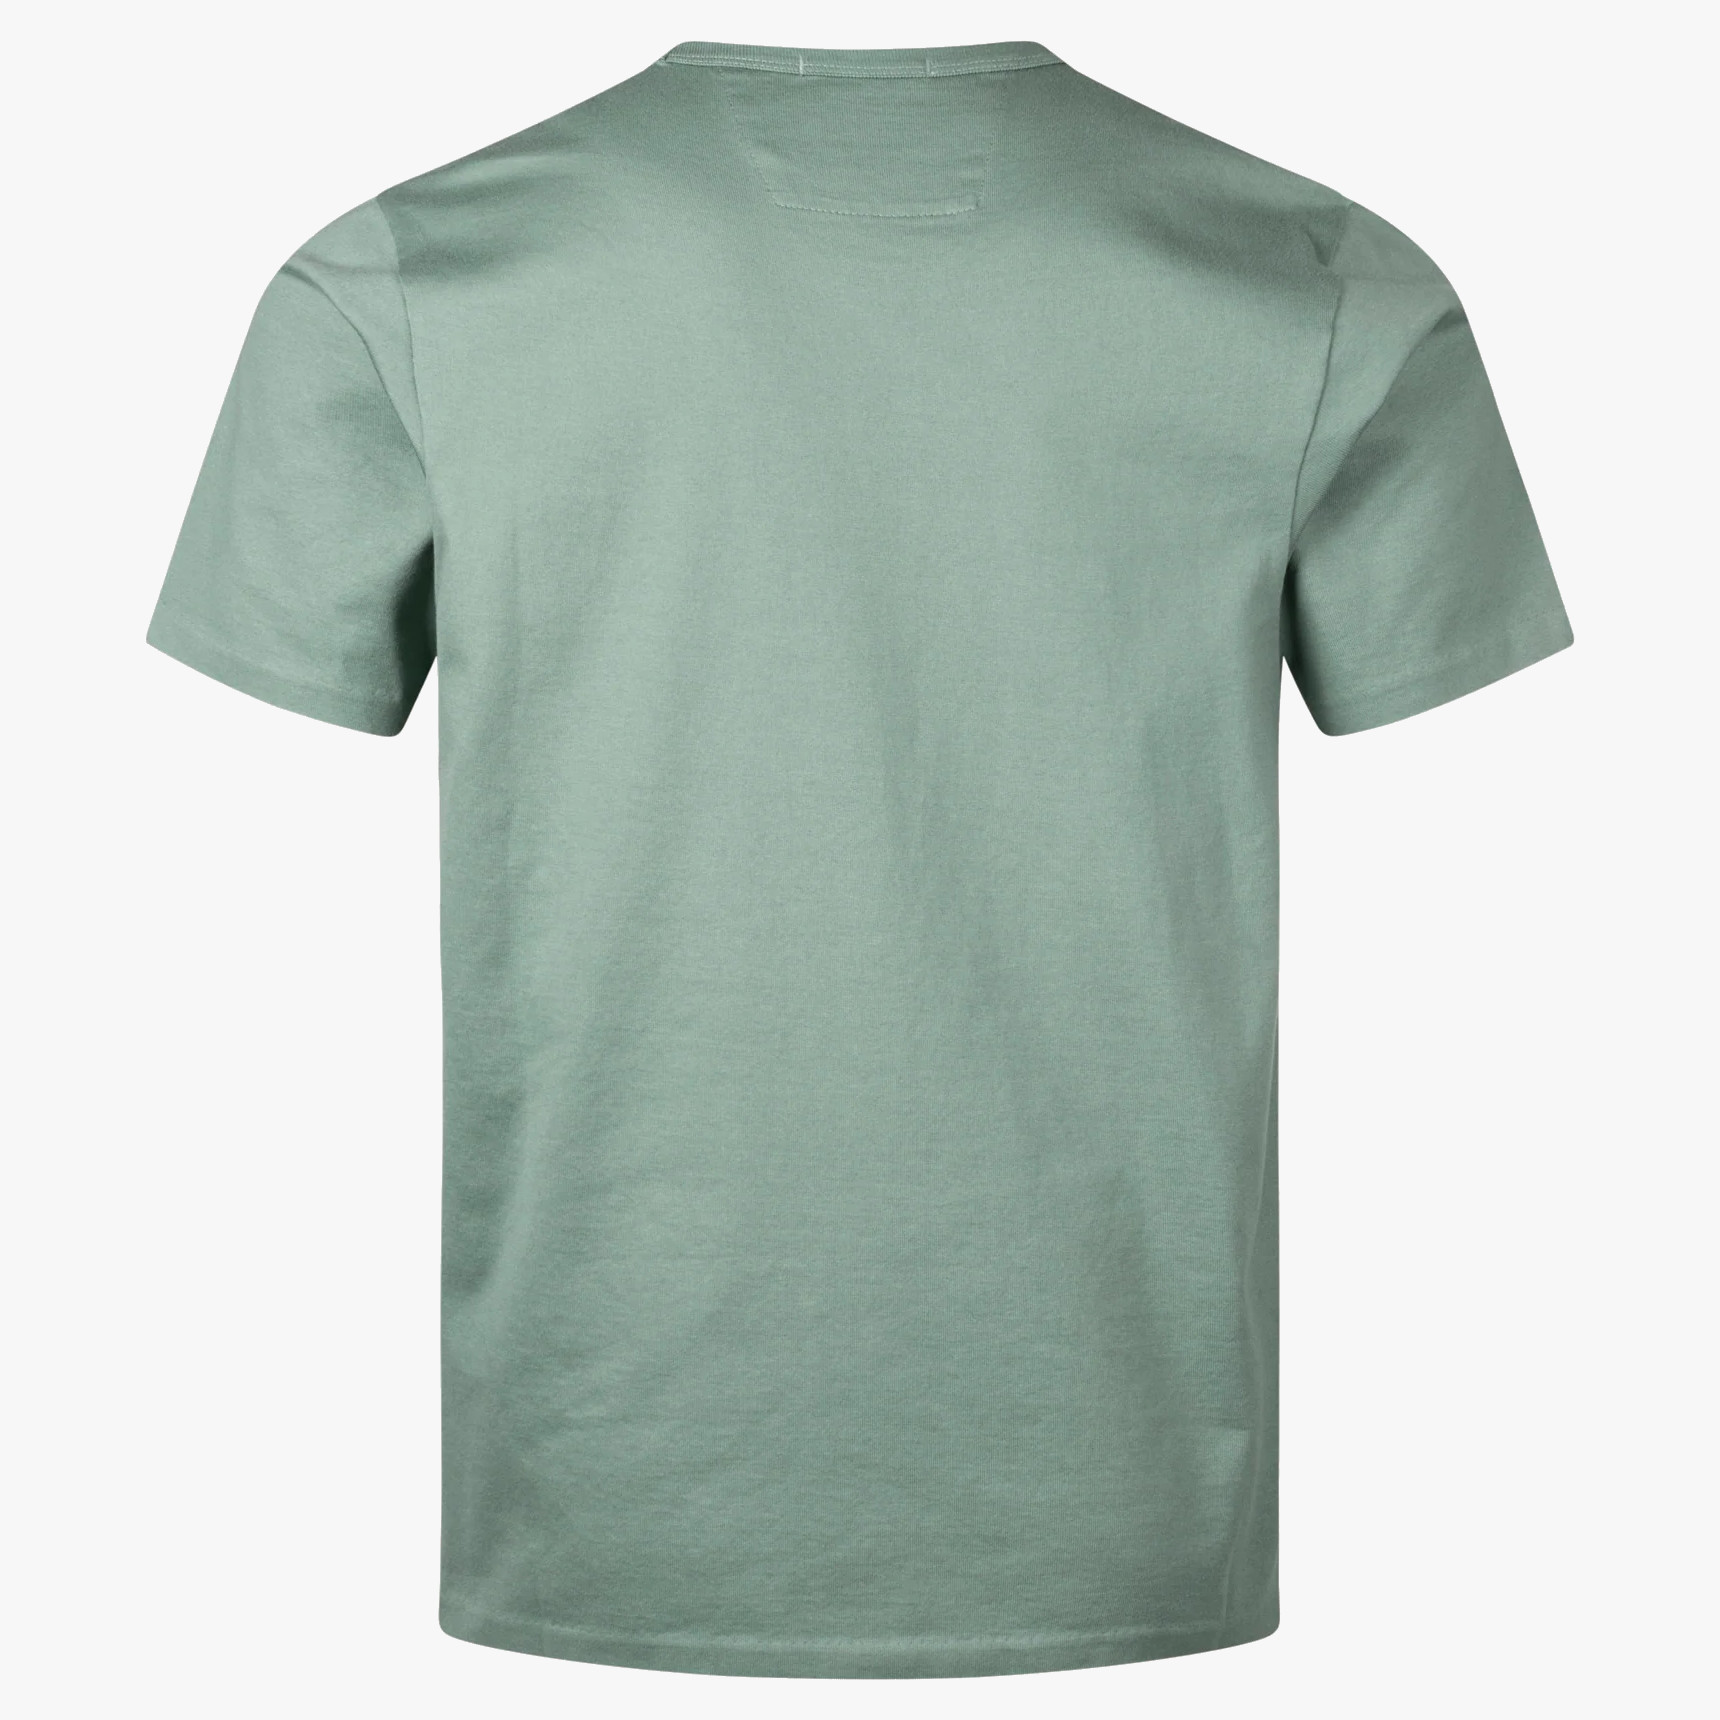 C.P. Company 302 Mercerized Jersey Twisted British Sailor T-Shirt Green Bay